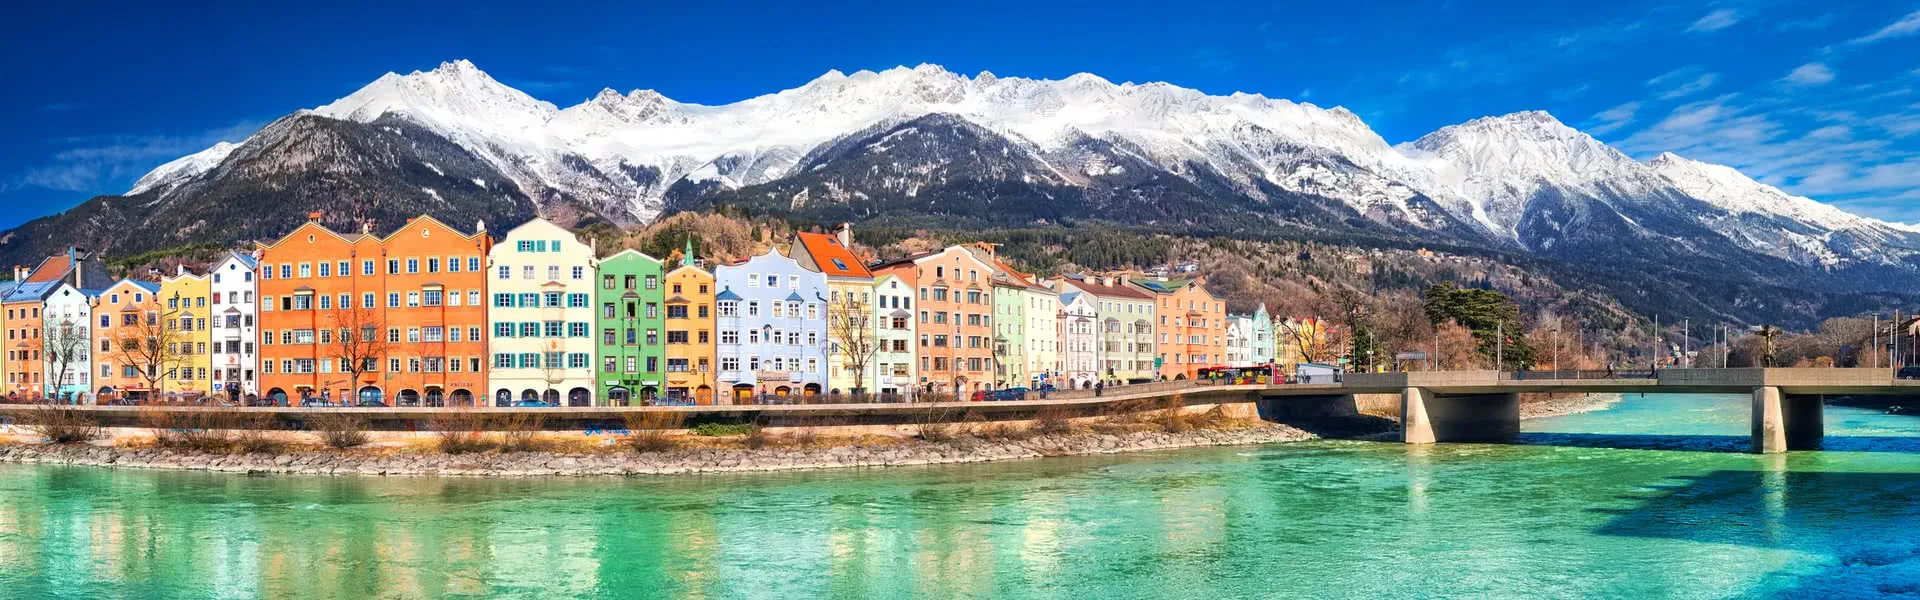 Innsbruck - the destination for school trips